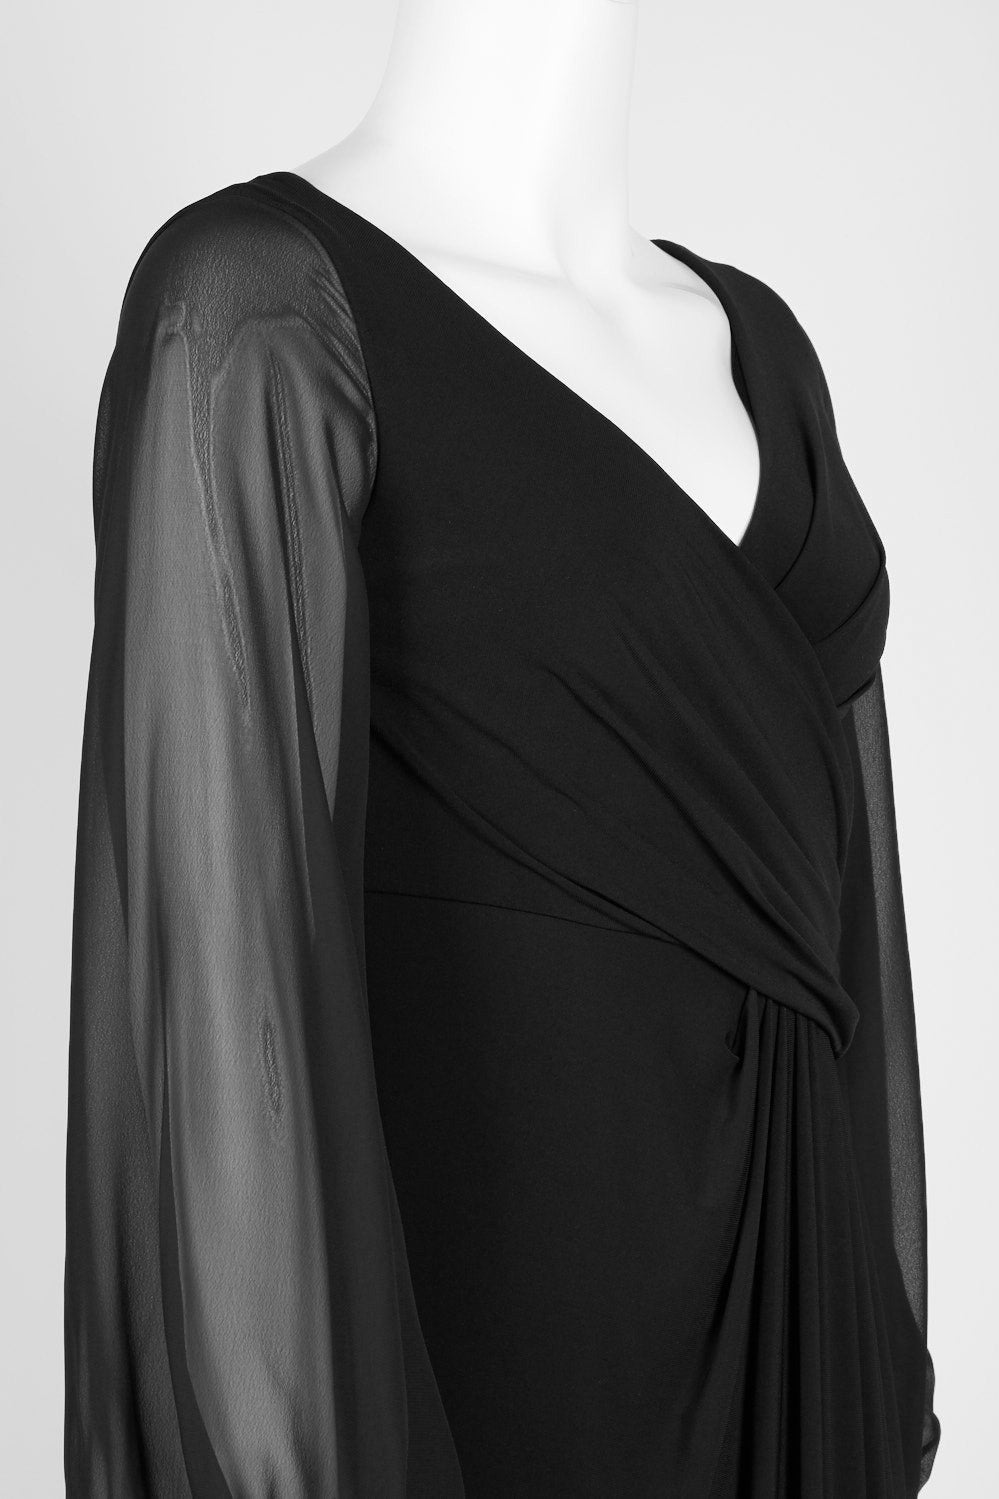 Adrianna Papell - AP1E205892 Long Sleeve V-neck Jersey Chiffon Dress In Black